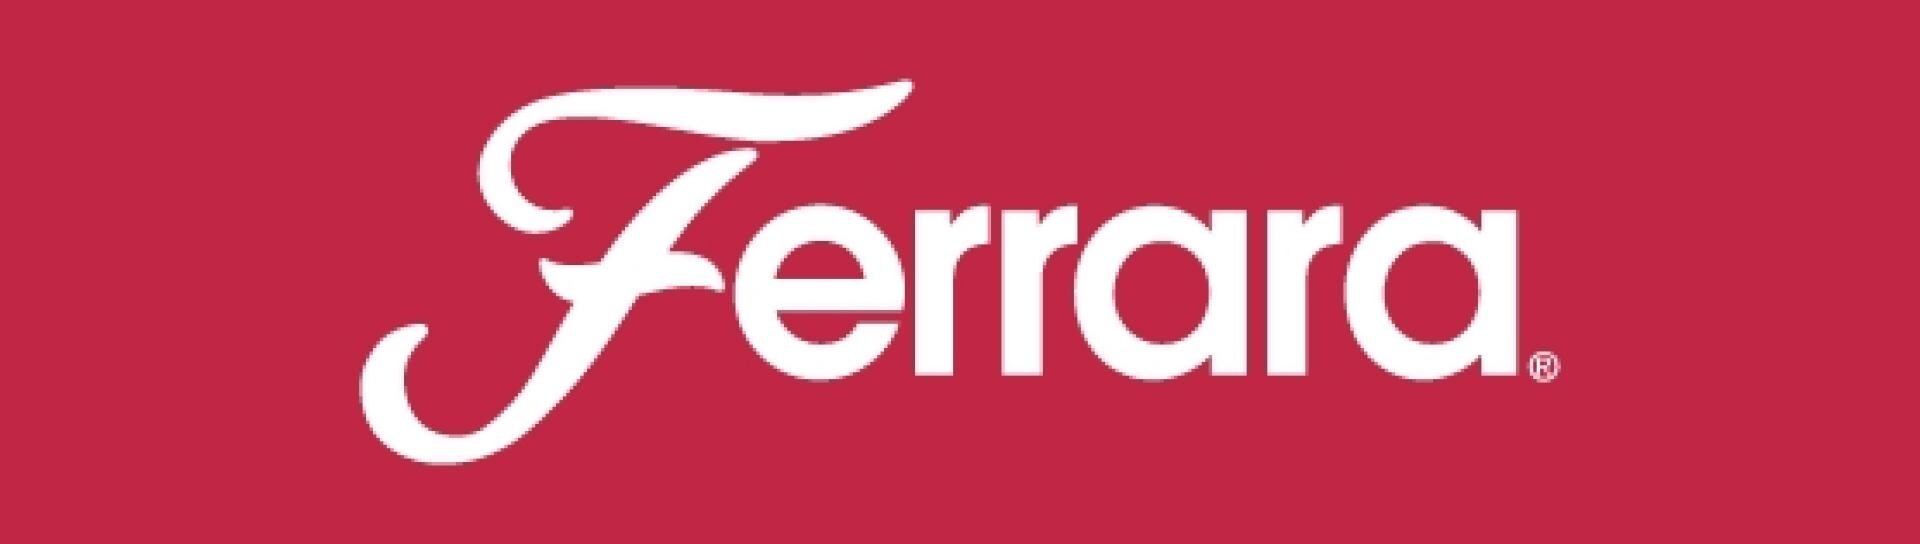 Ferrara (Corporate